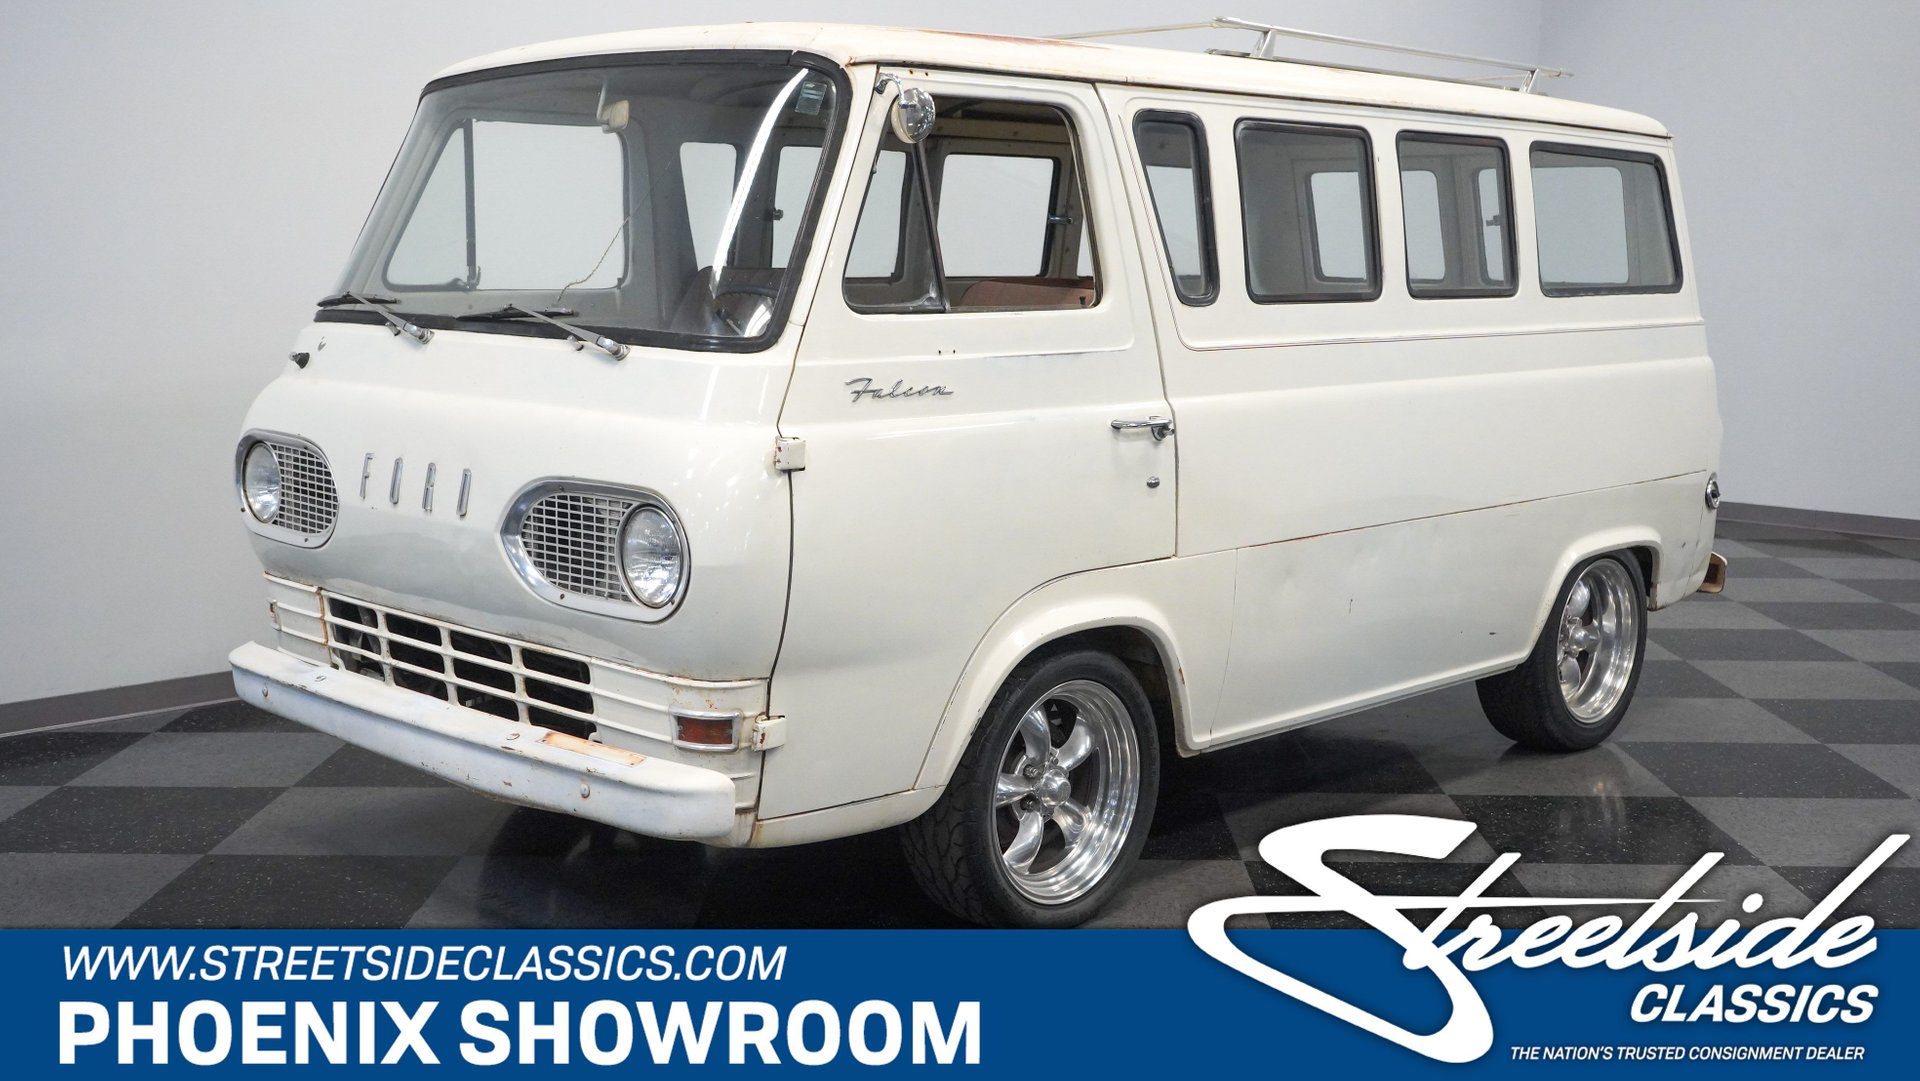 1966 Ford Econoline | Classic Cars for Sale - Streetside Classics